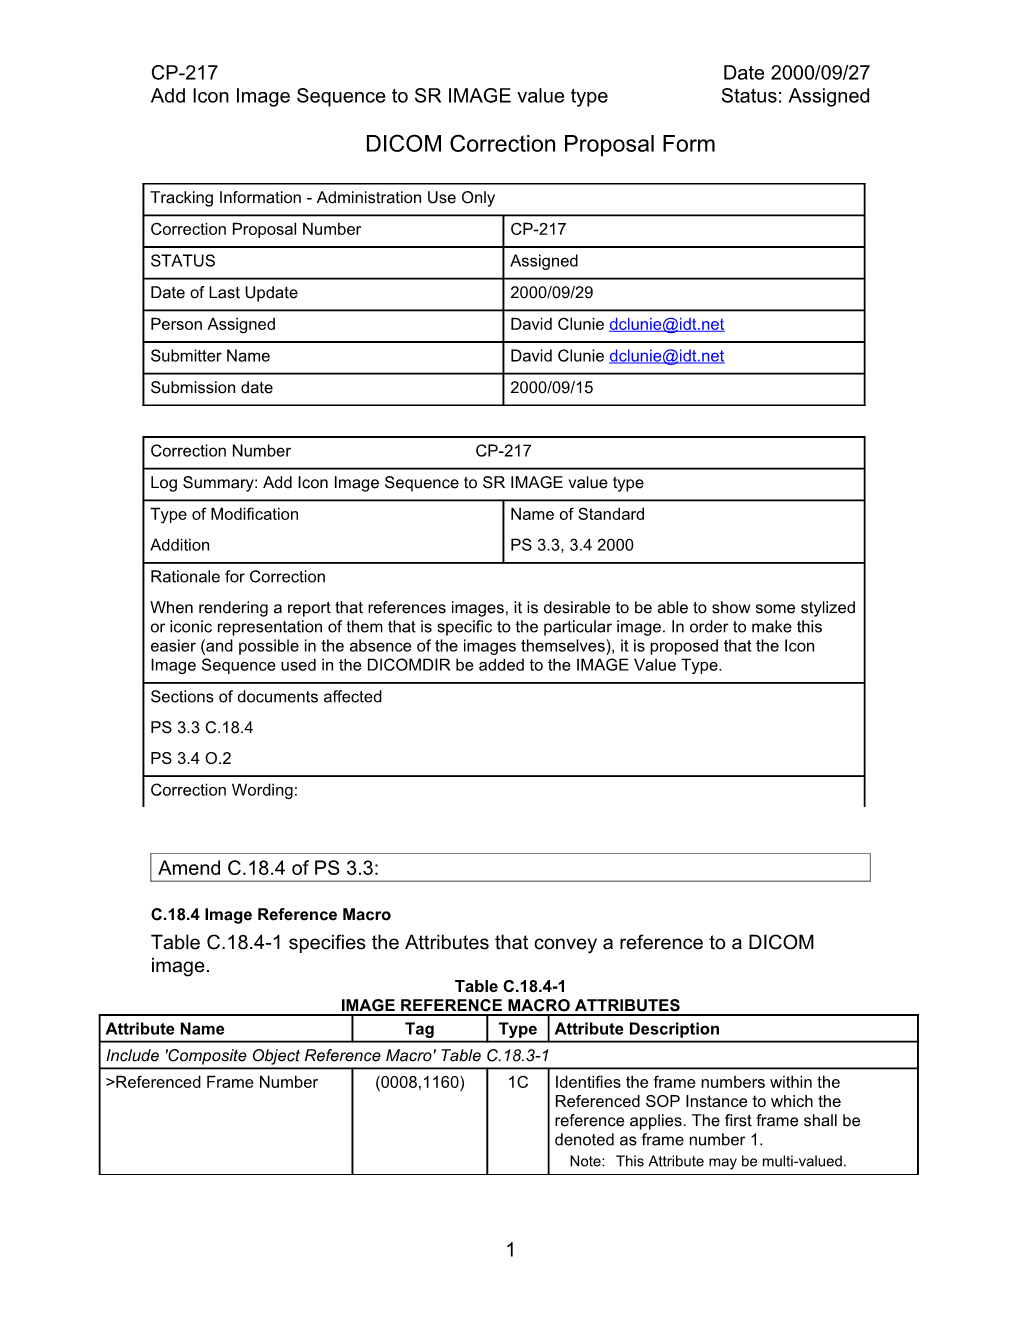 DICOM Correction Proposal Form s3